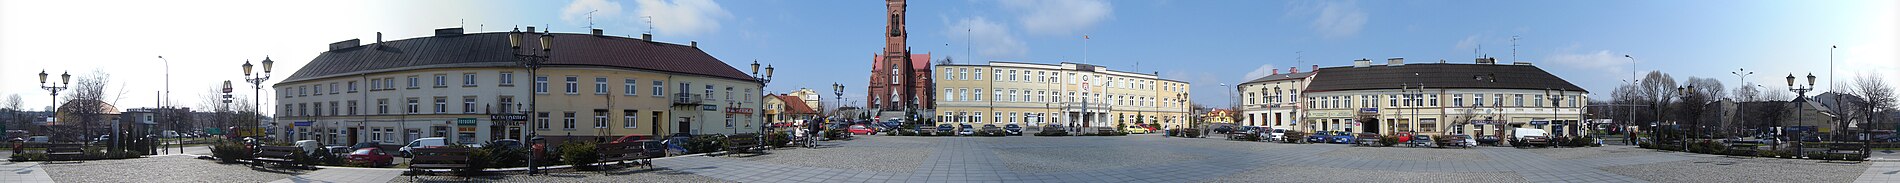 Panorama of the Jan Paweł II square in Zgierz.